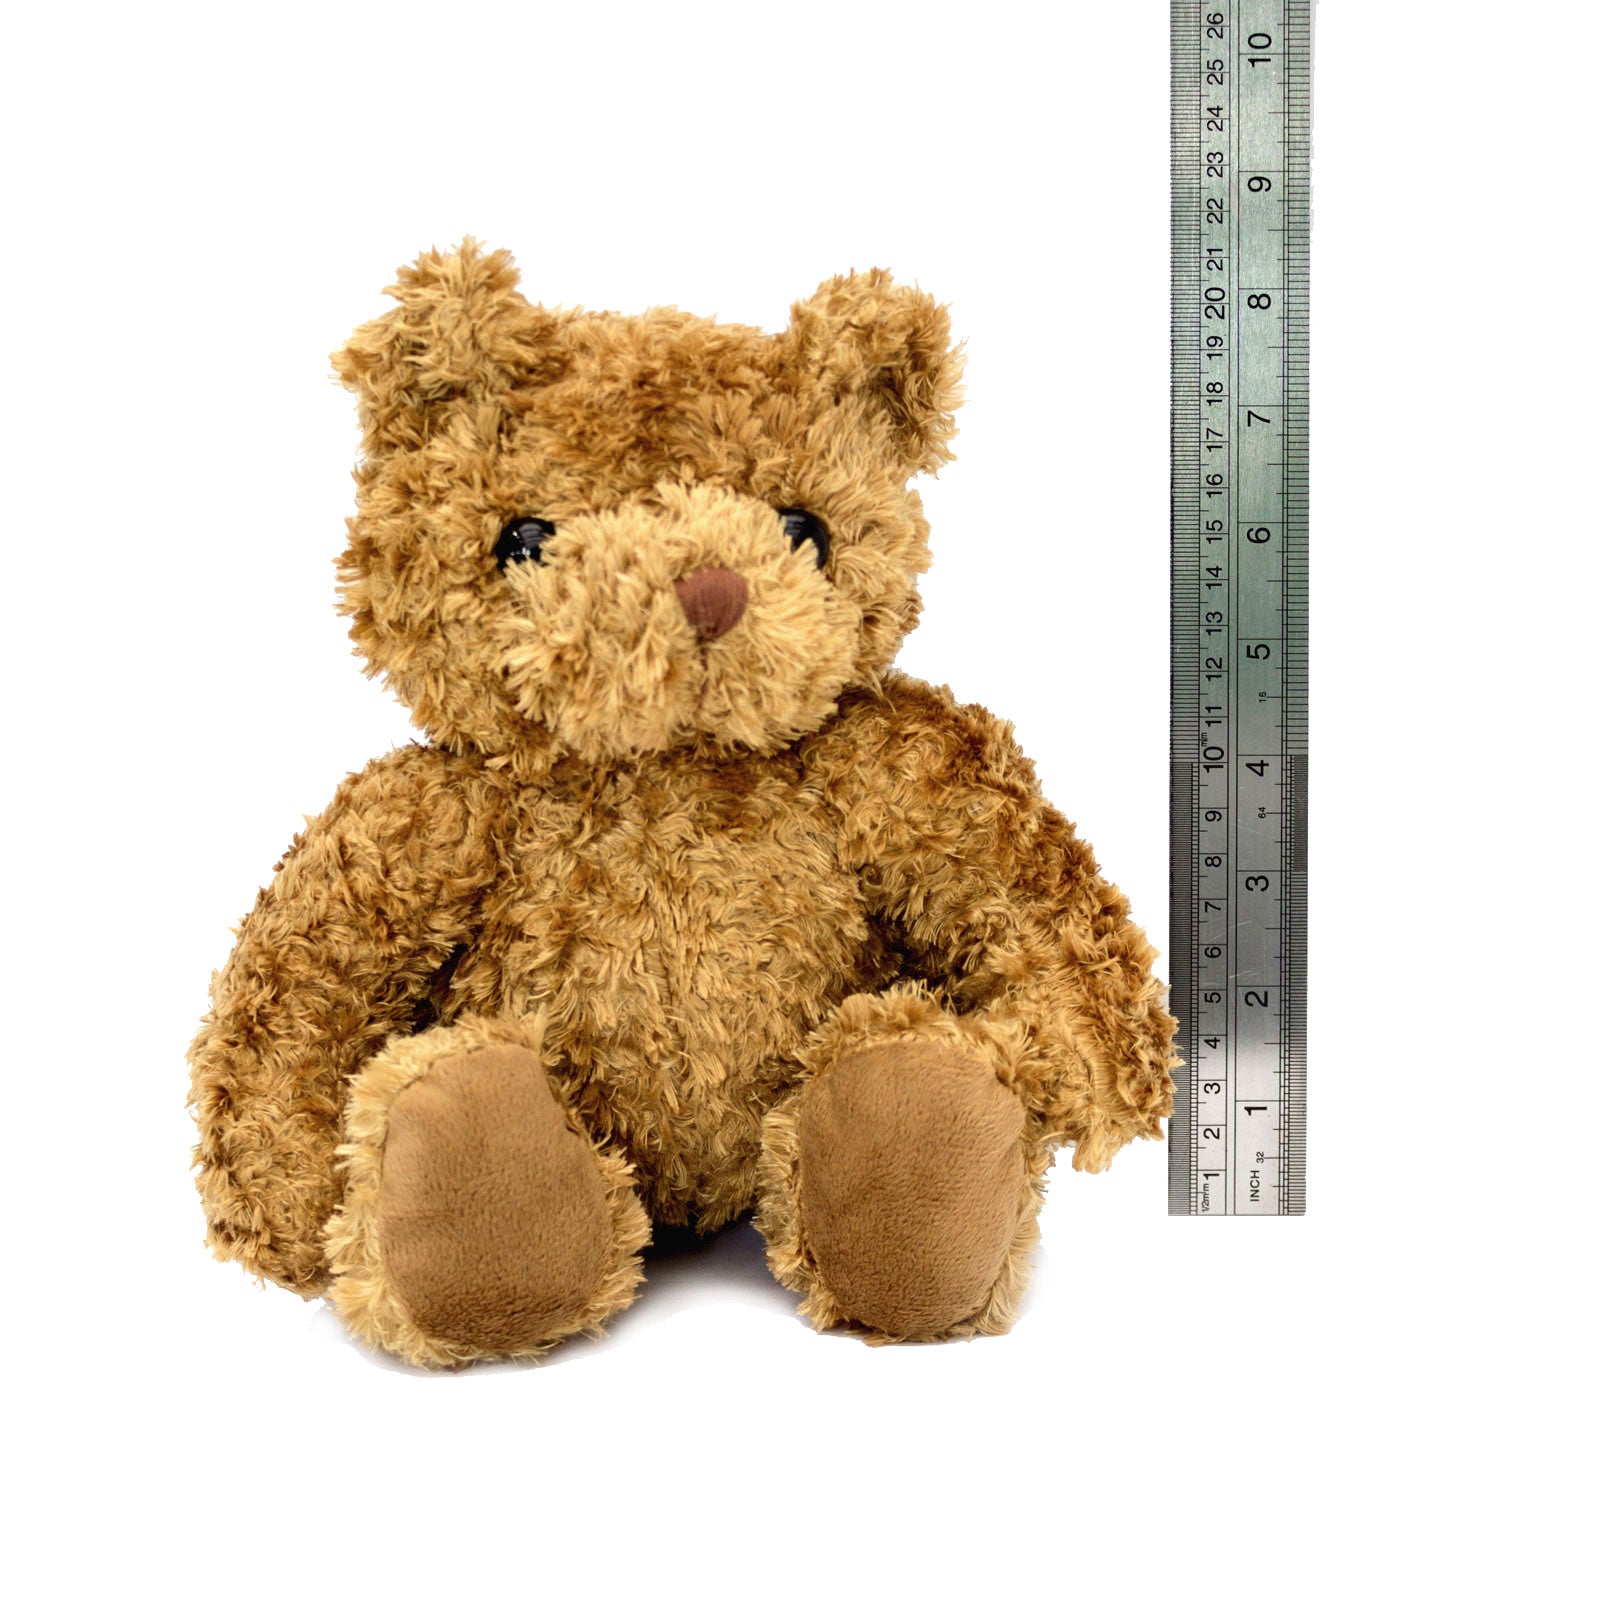 Get Well Soon Hassan - Teddy Bear